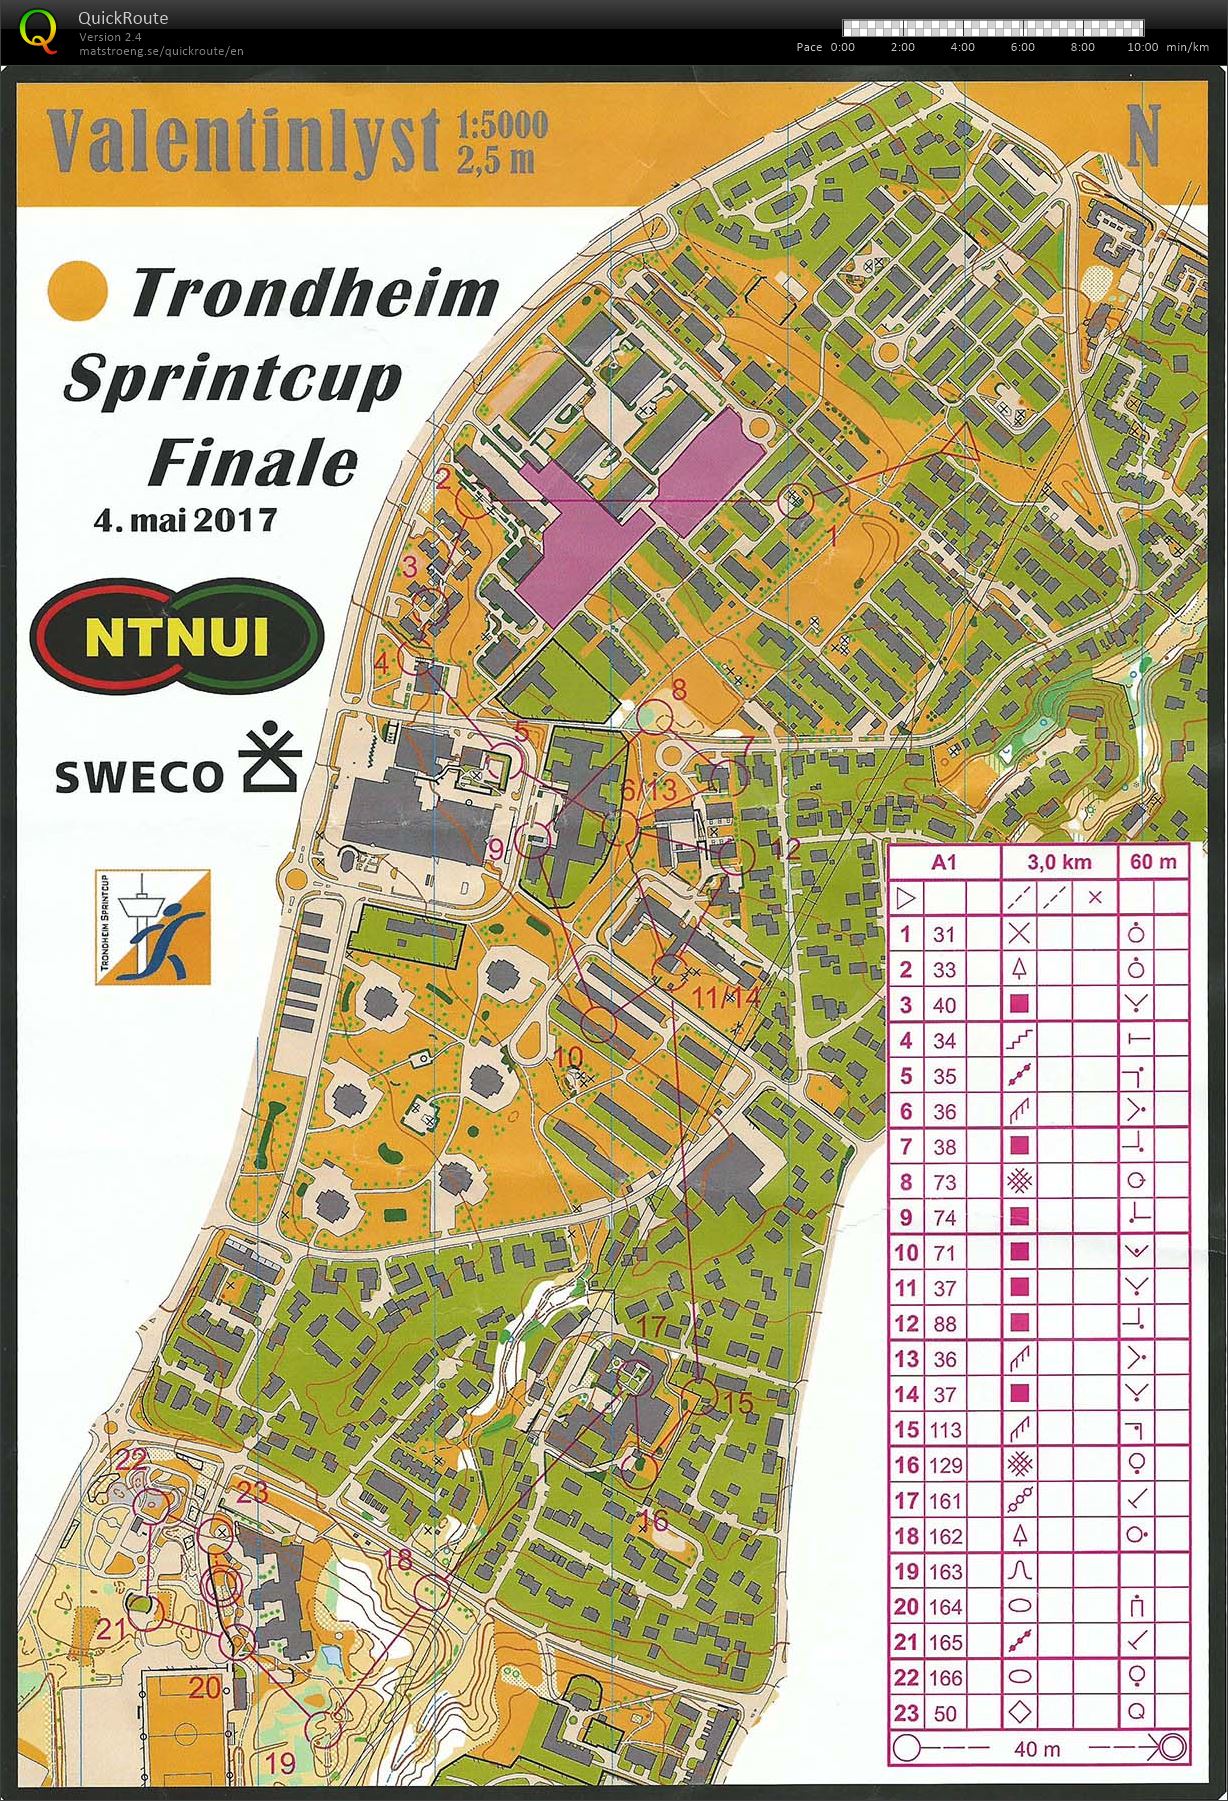 Trondheim Sprintcup finale (04/05/2017)